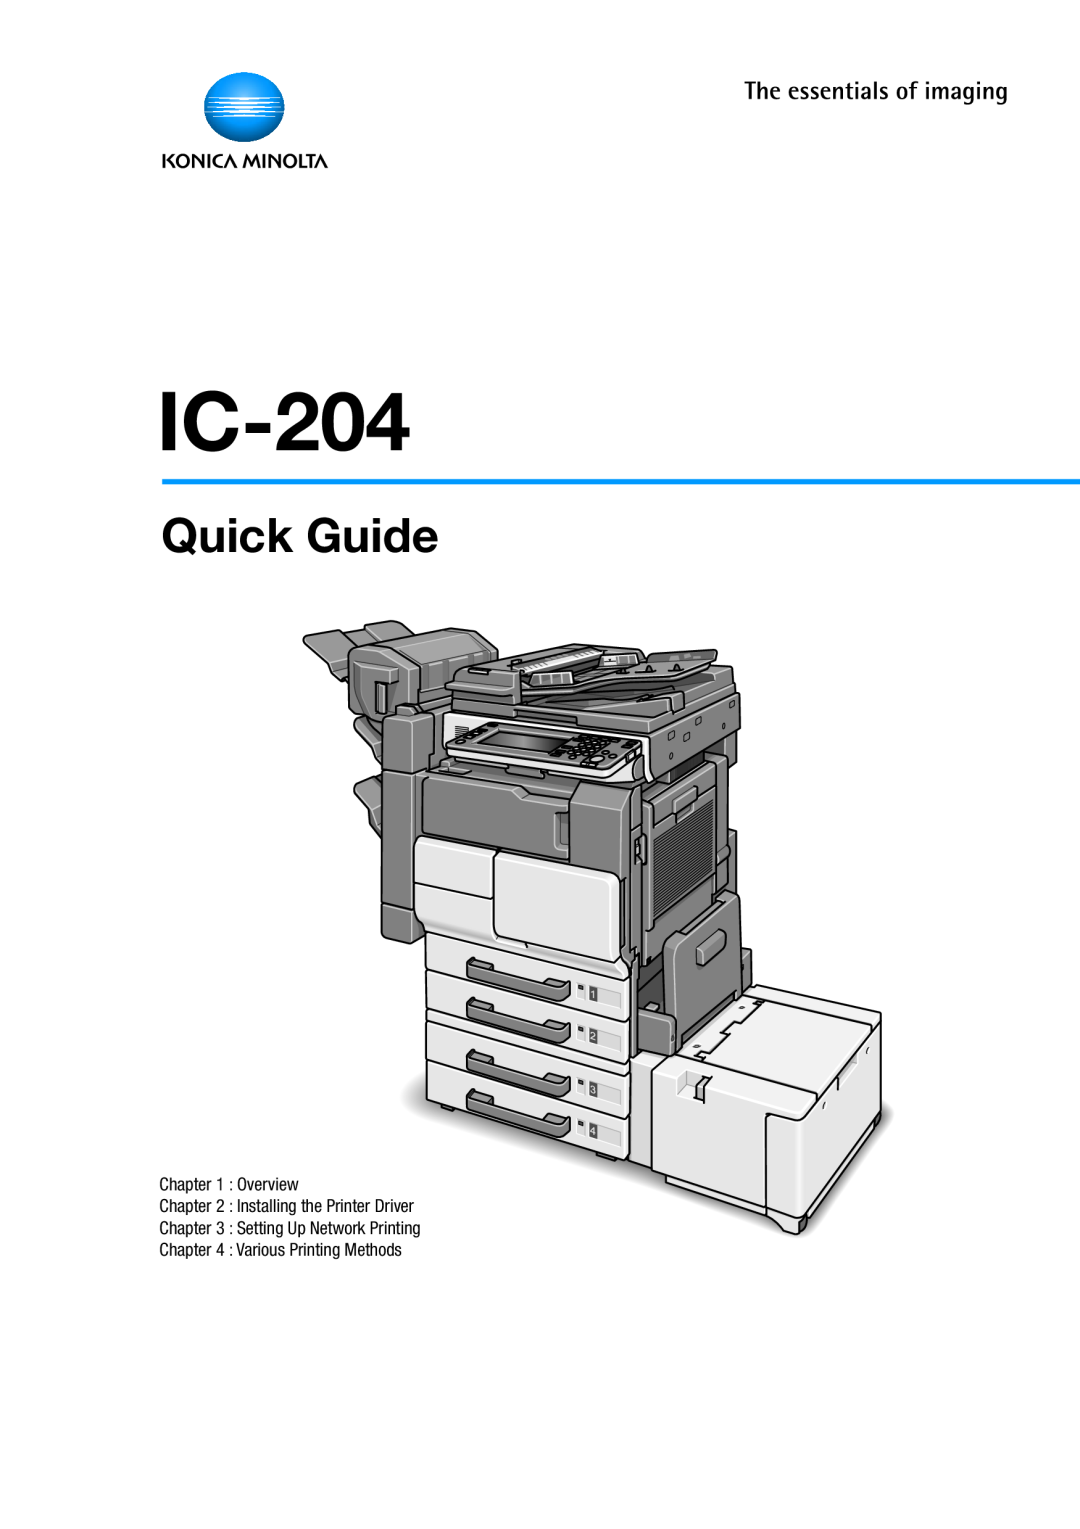 Konica Minolta IC-204 manual Quick Guide 